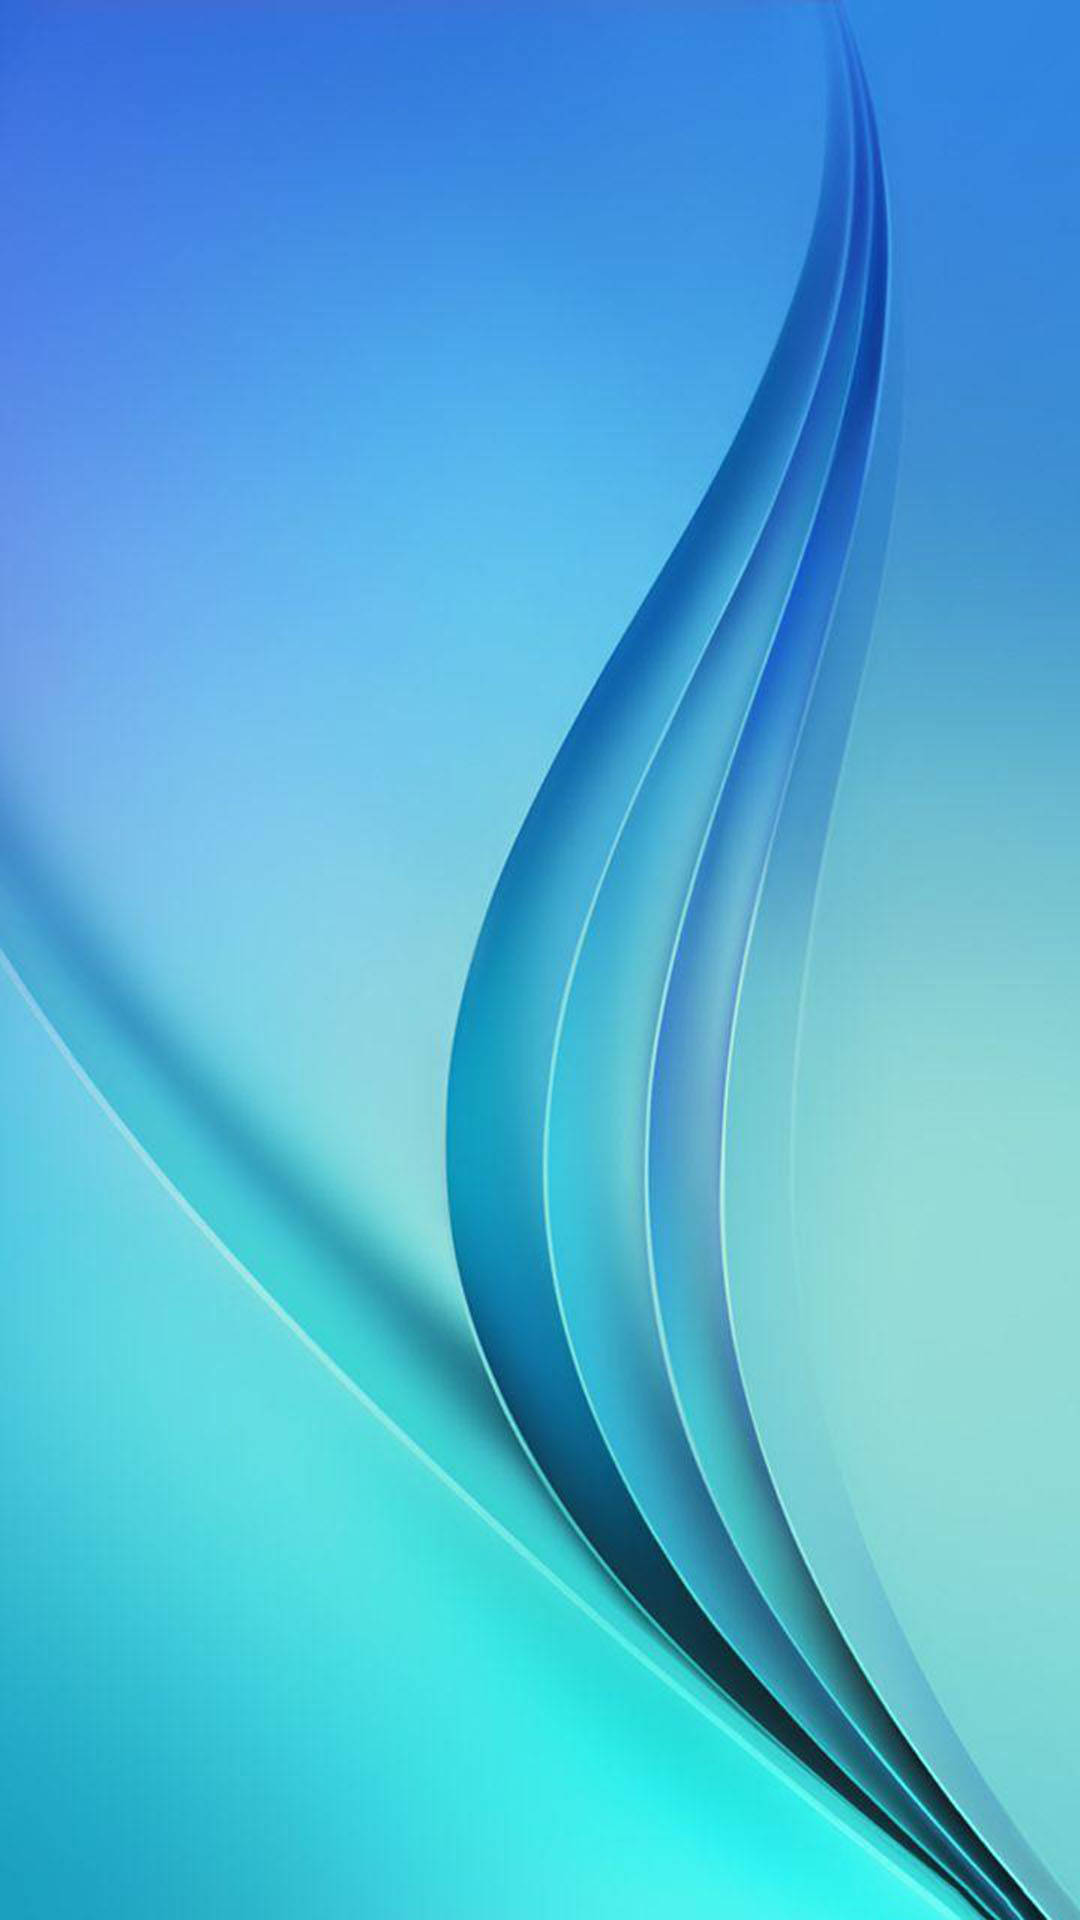 Samsung Mobile Cyan Waves Background